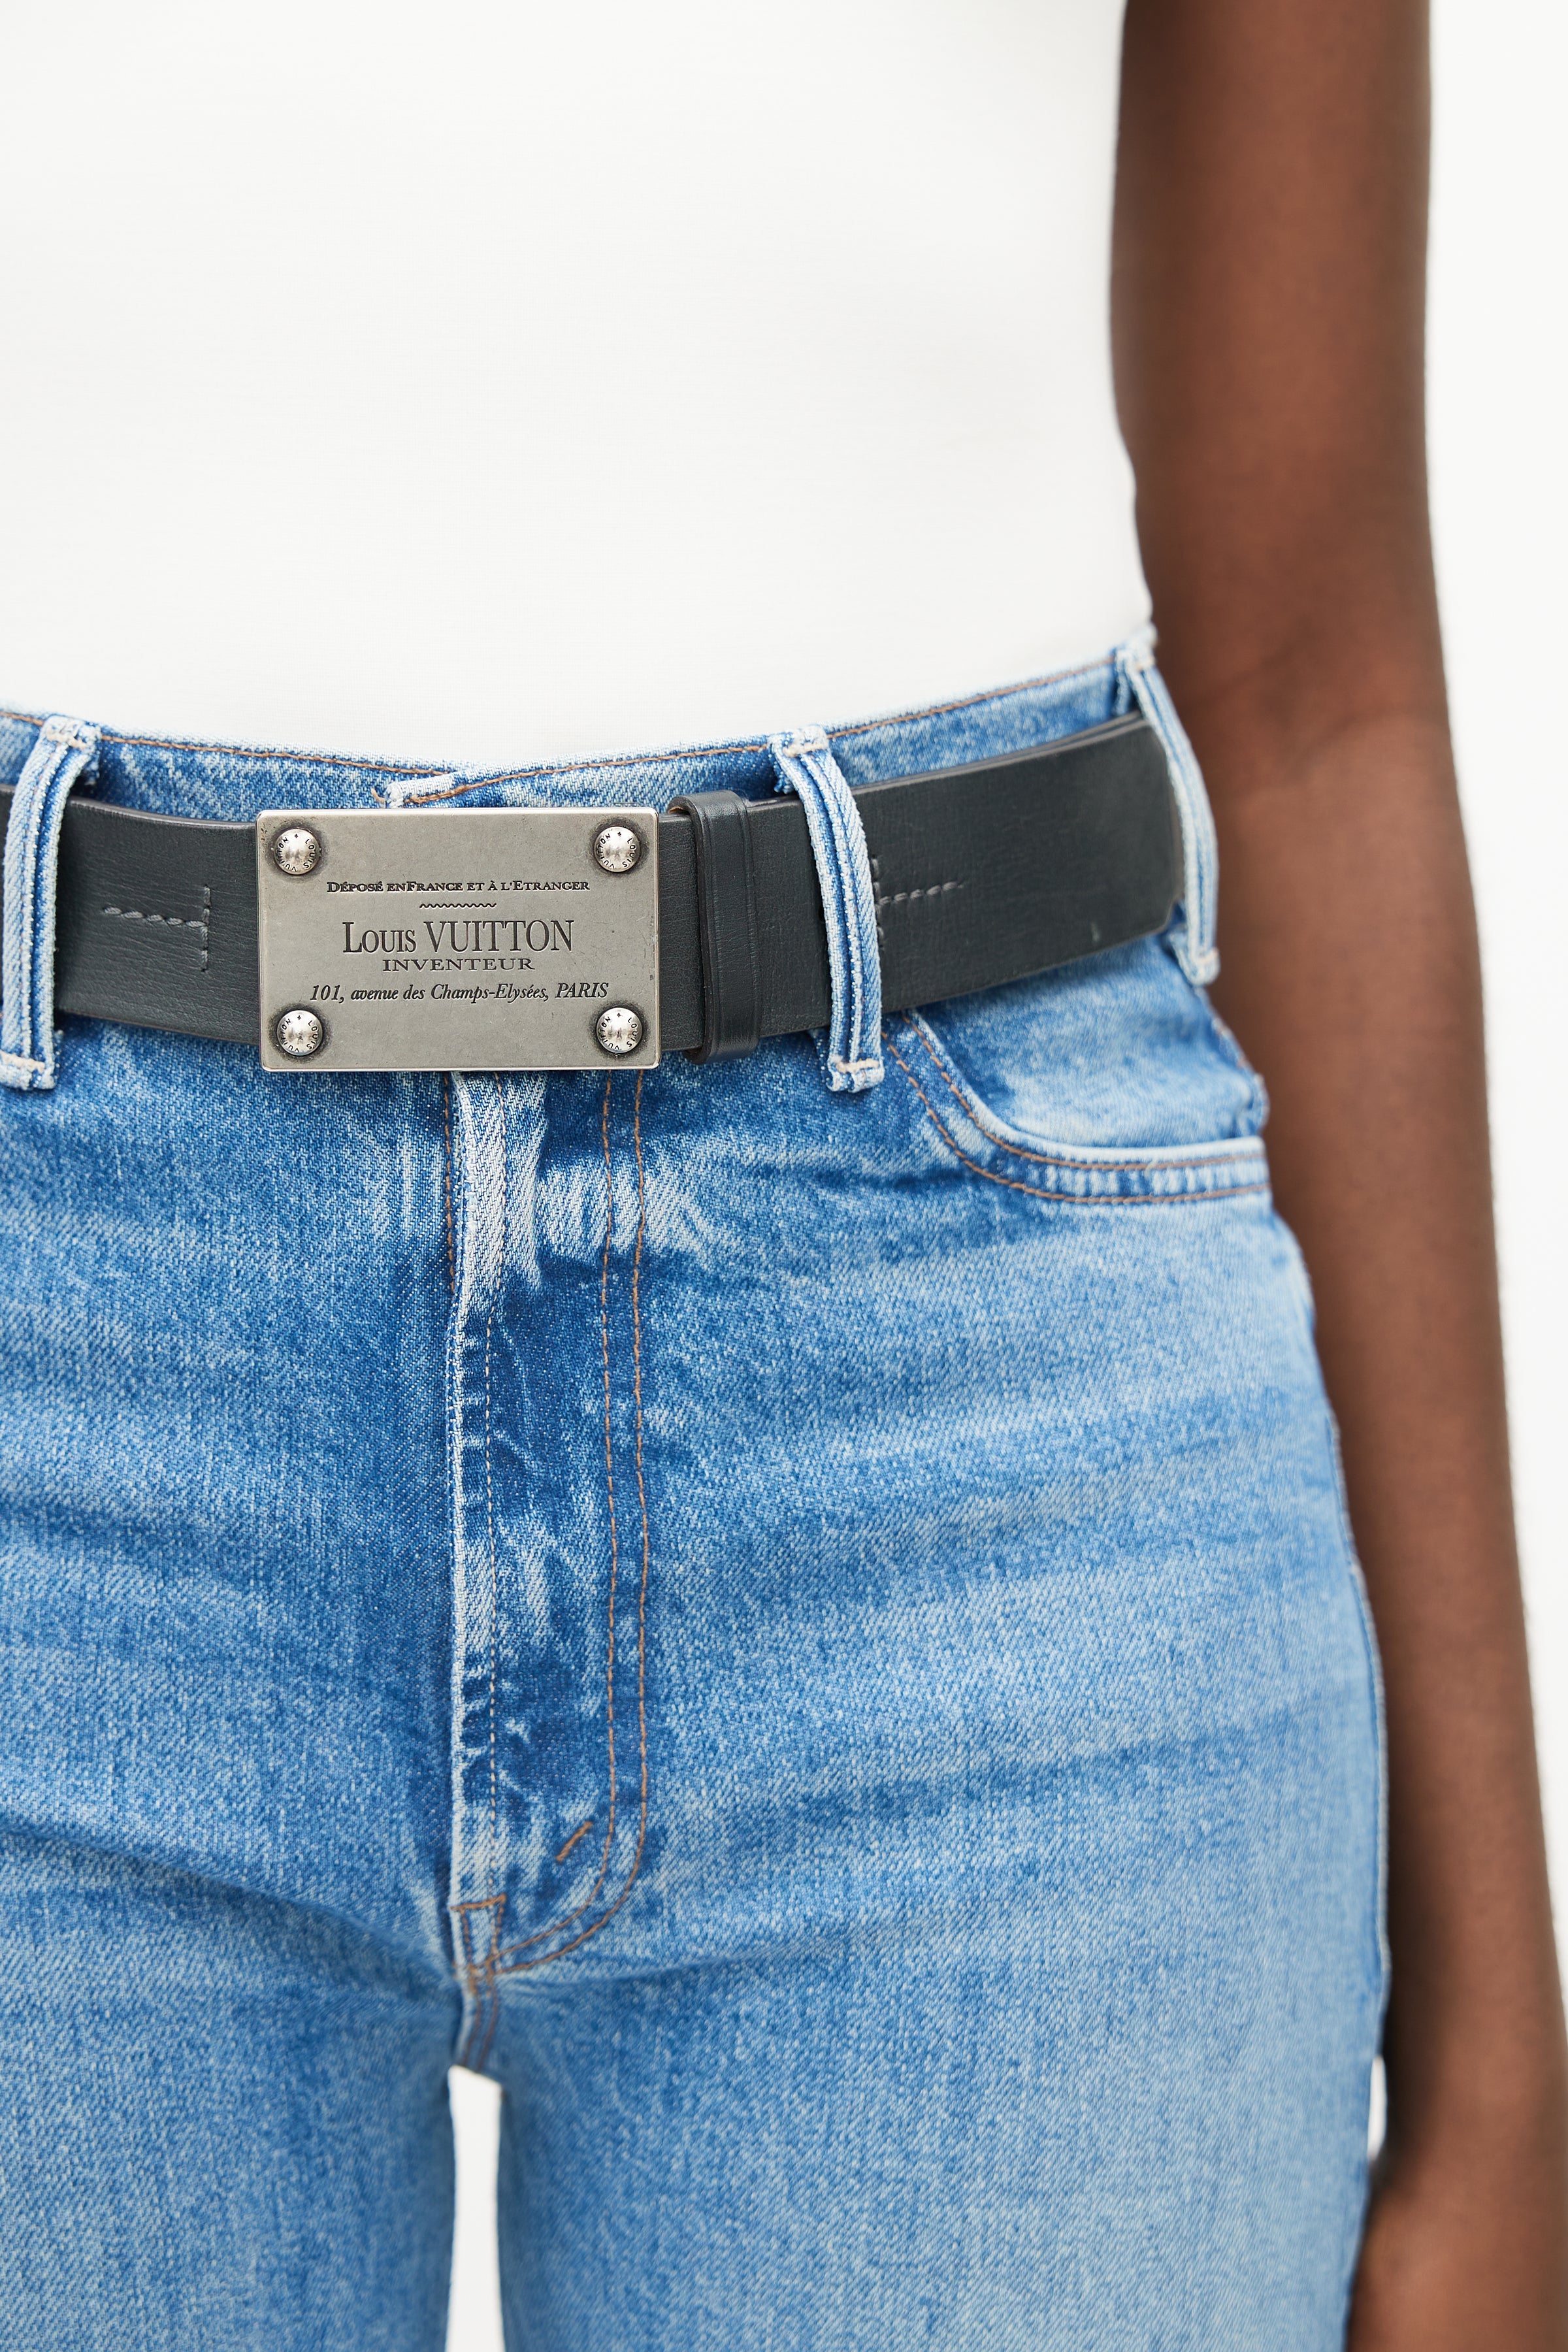 Louis Vuitton leather Genuine belt Missing Original Box men's belt